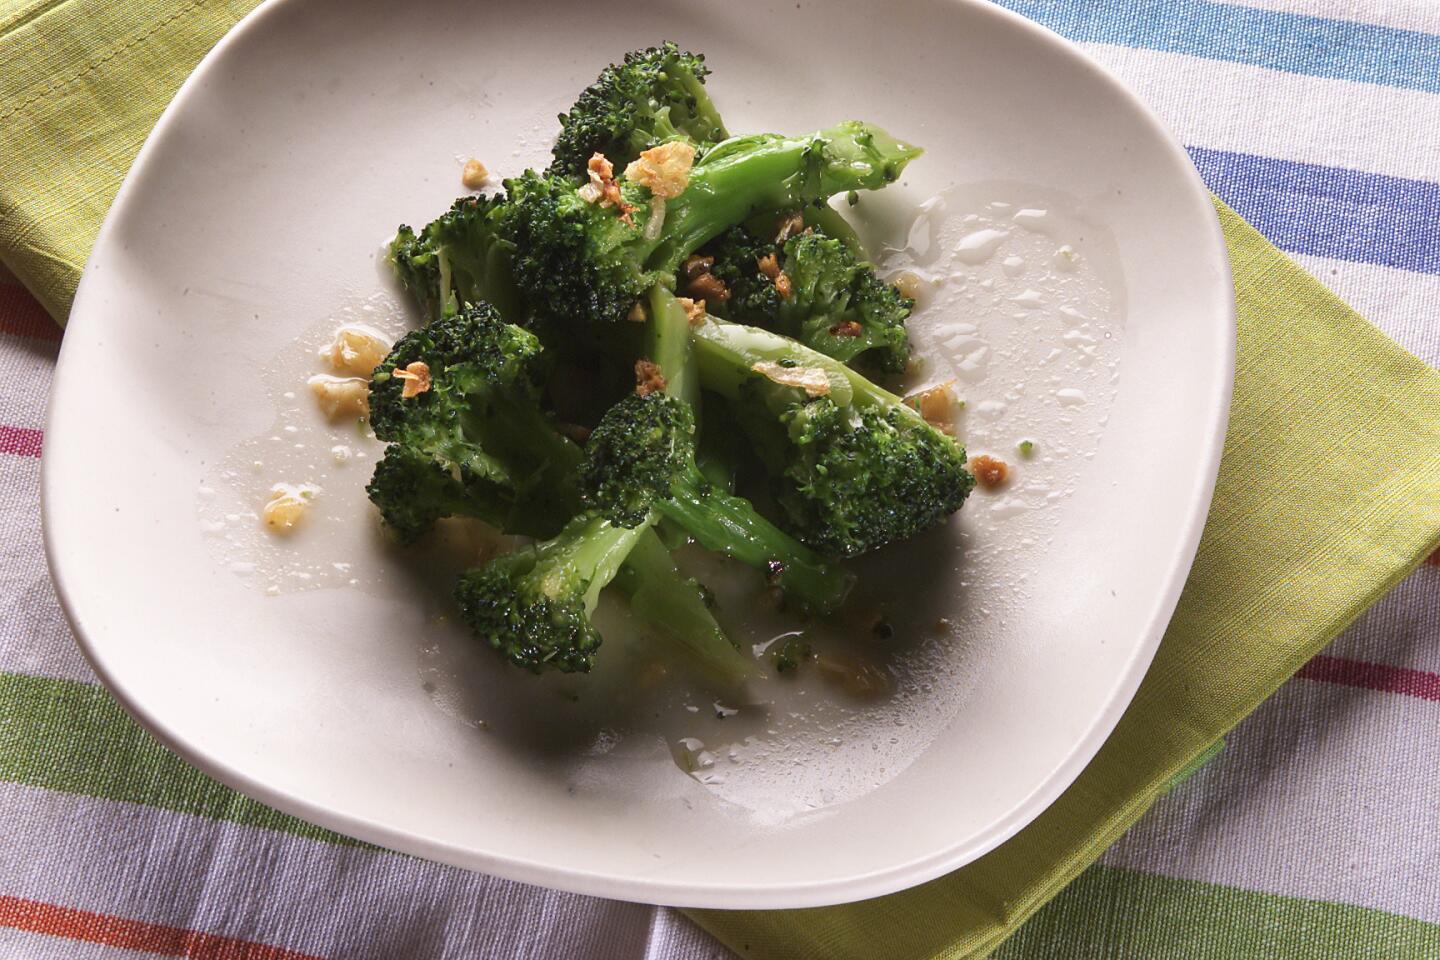 Thai-style broccoli with garlic